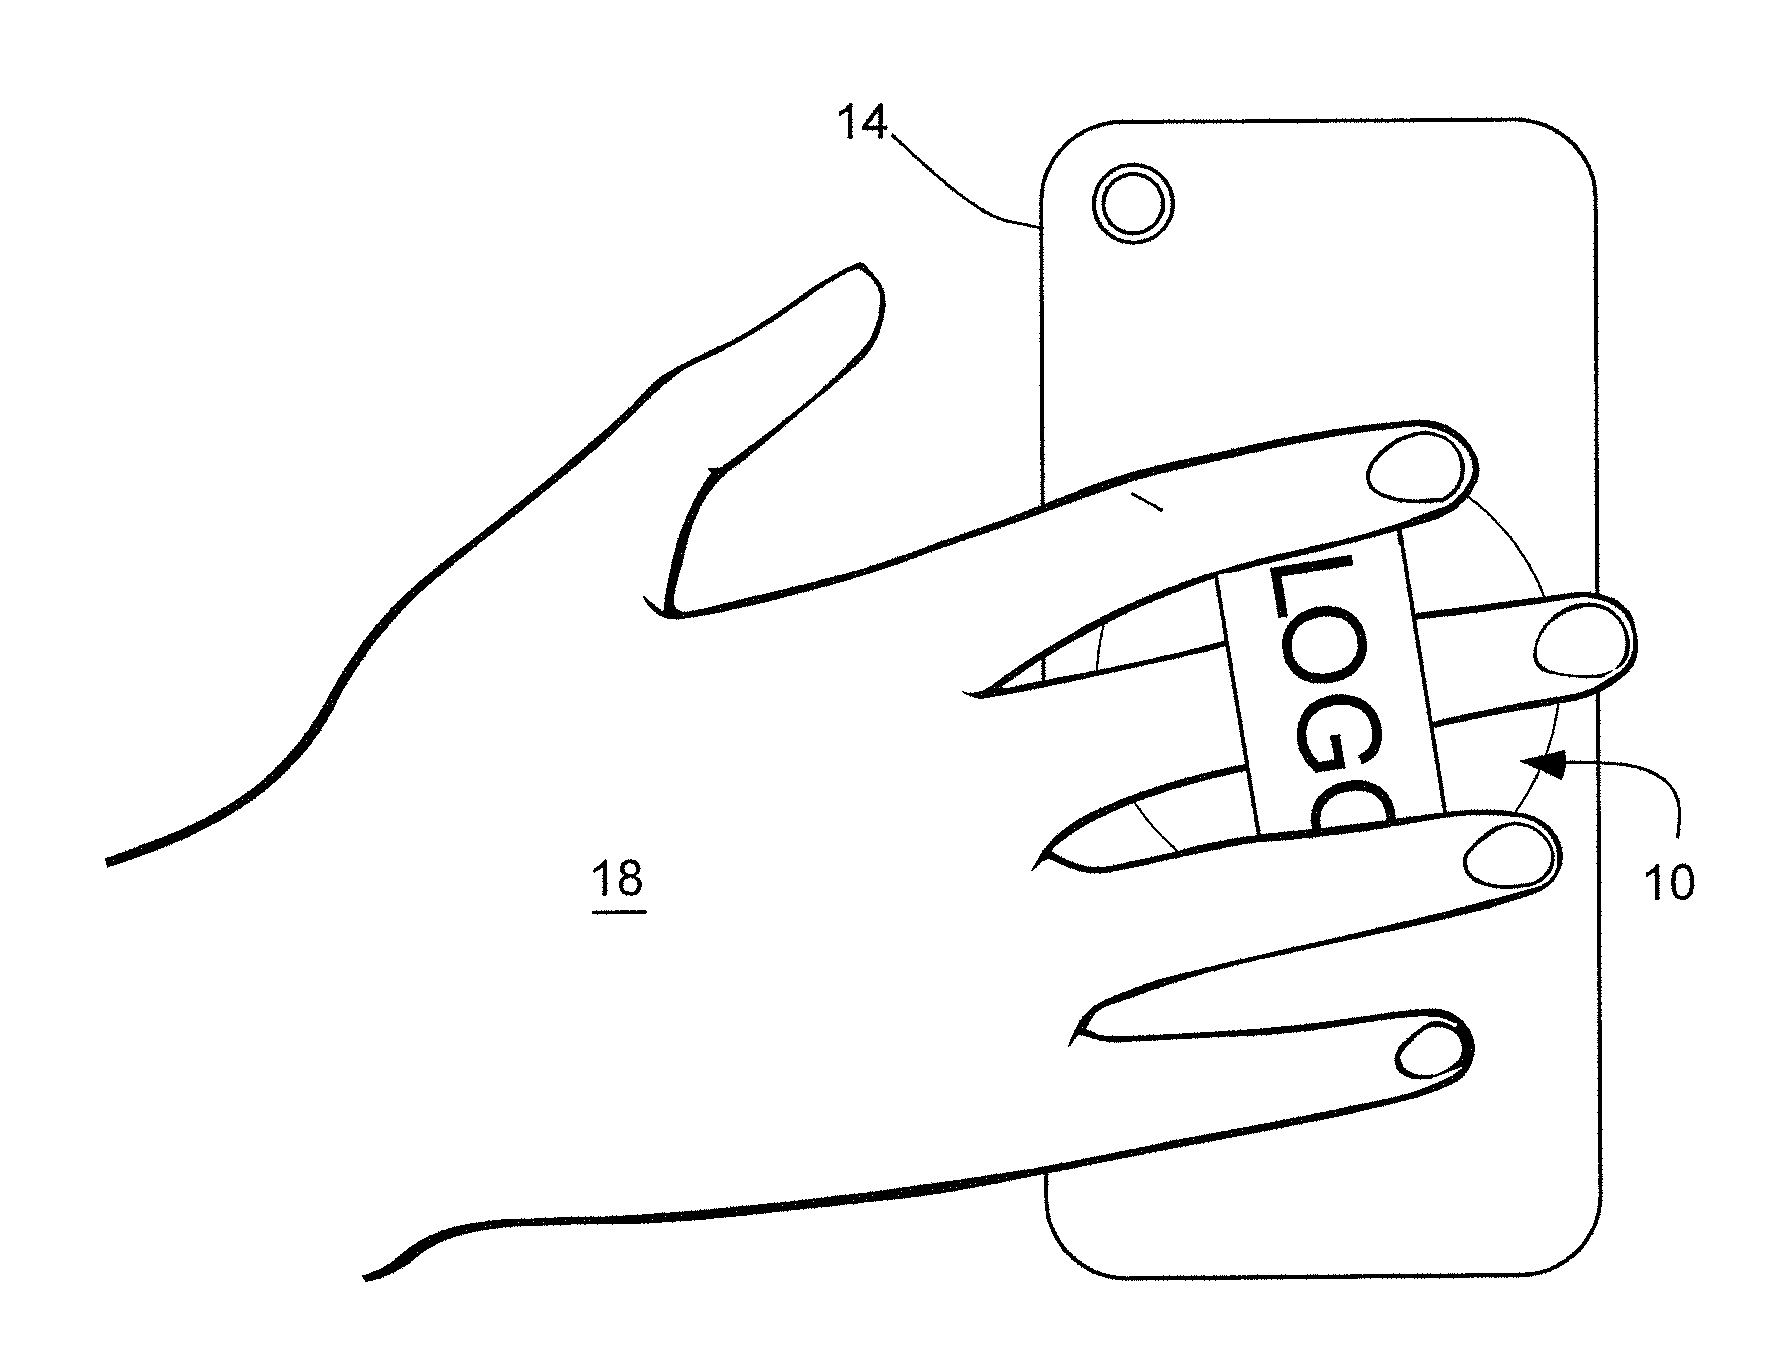 Swivel finger strap for a mobile device